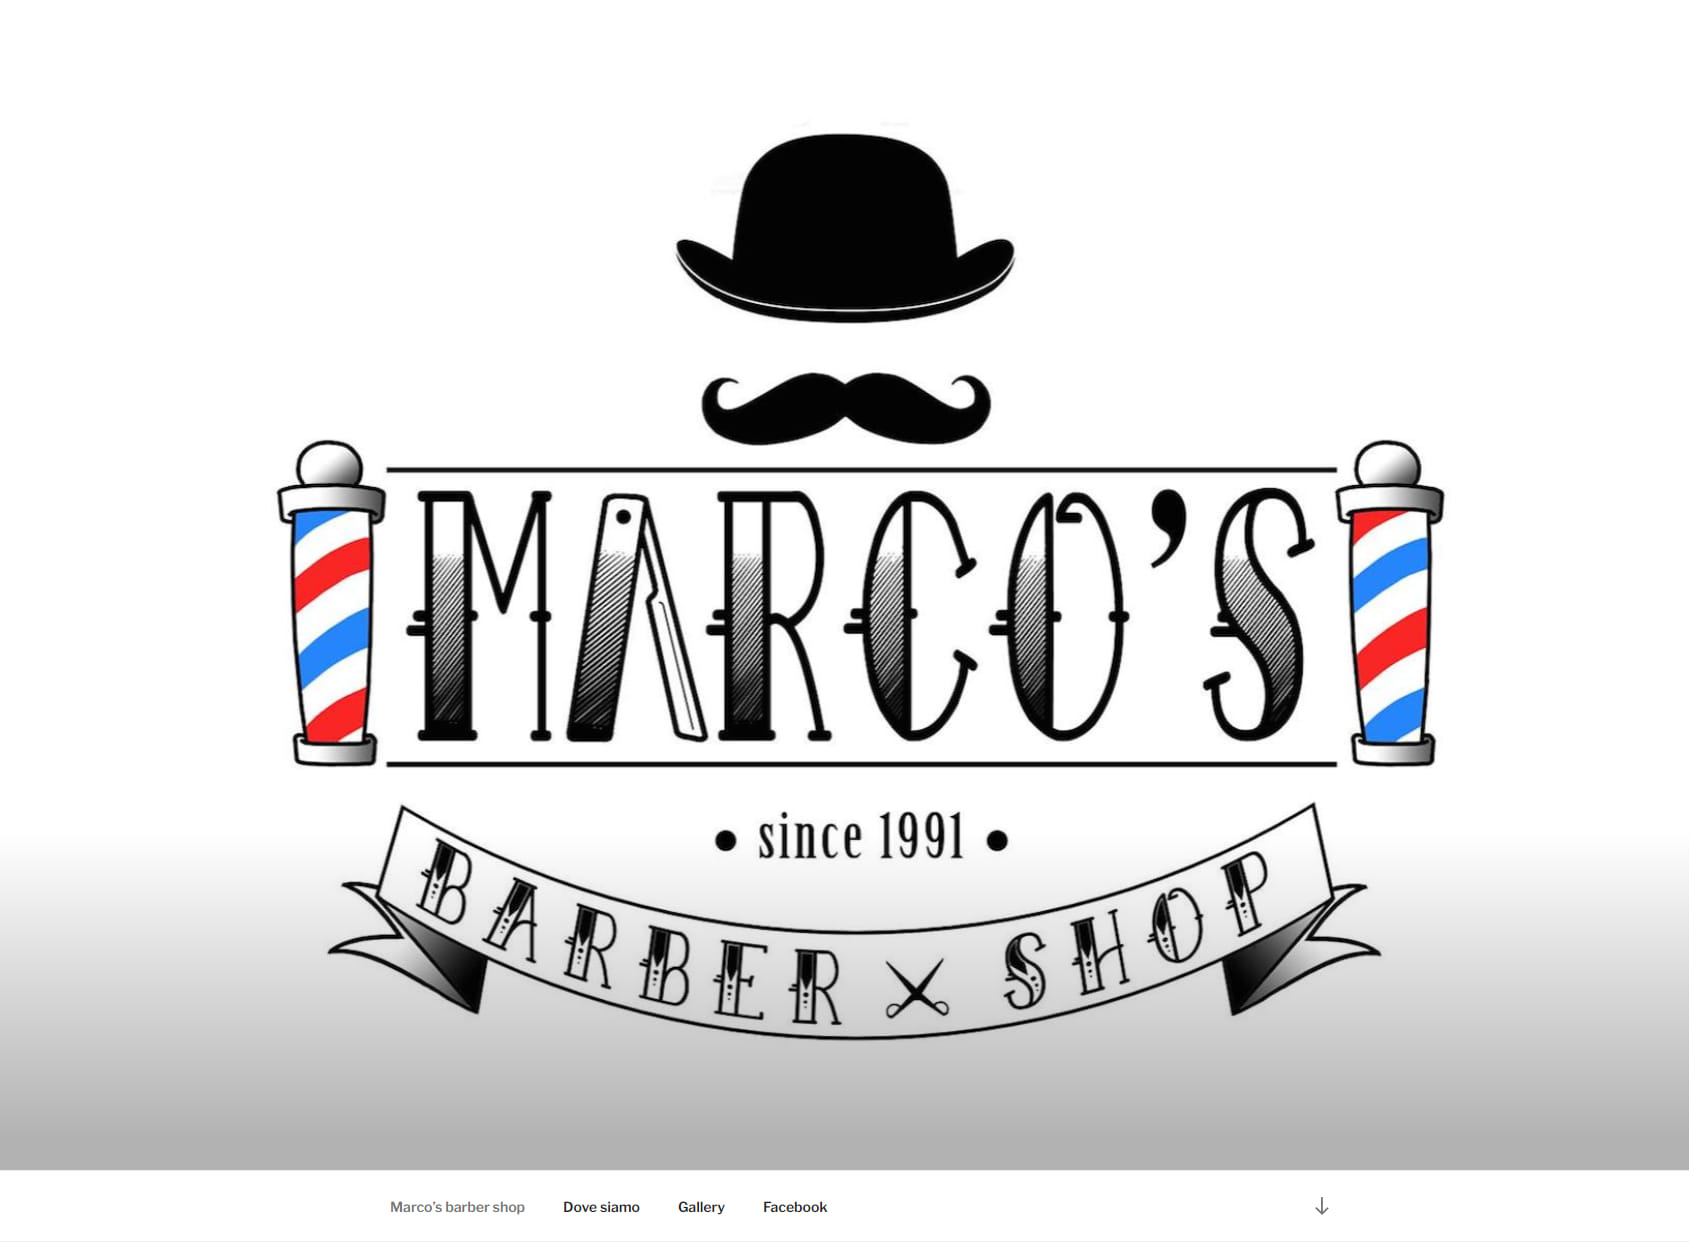 Marco's Barber Shop